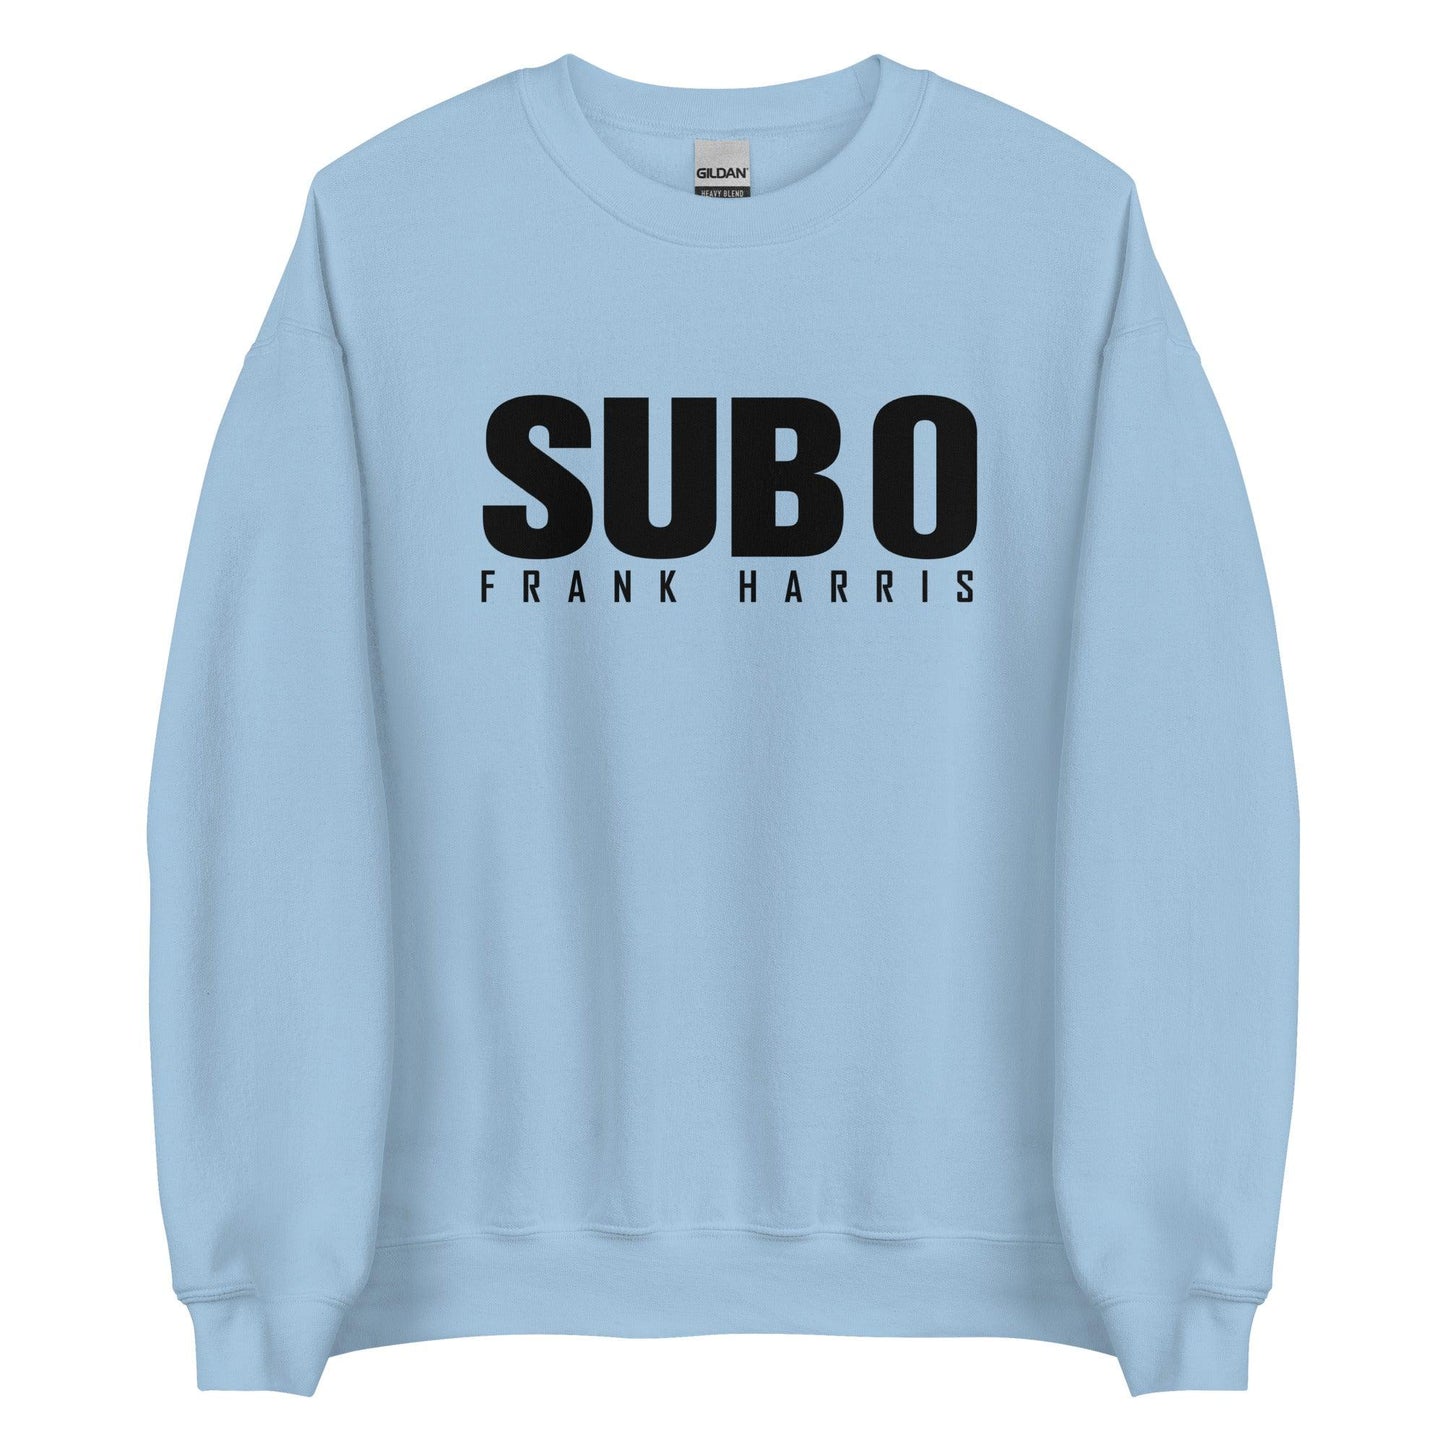 Frank Harris "Sub 0" Sweatshirt - Fan Arch